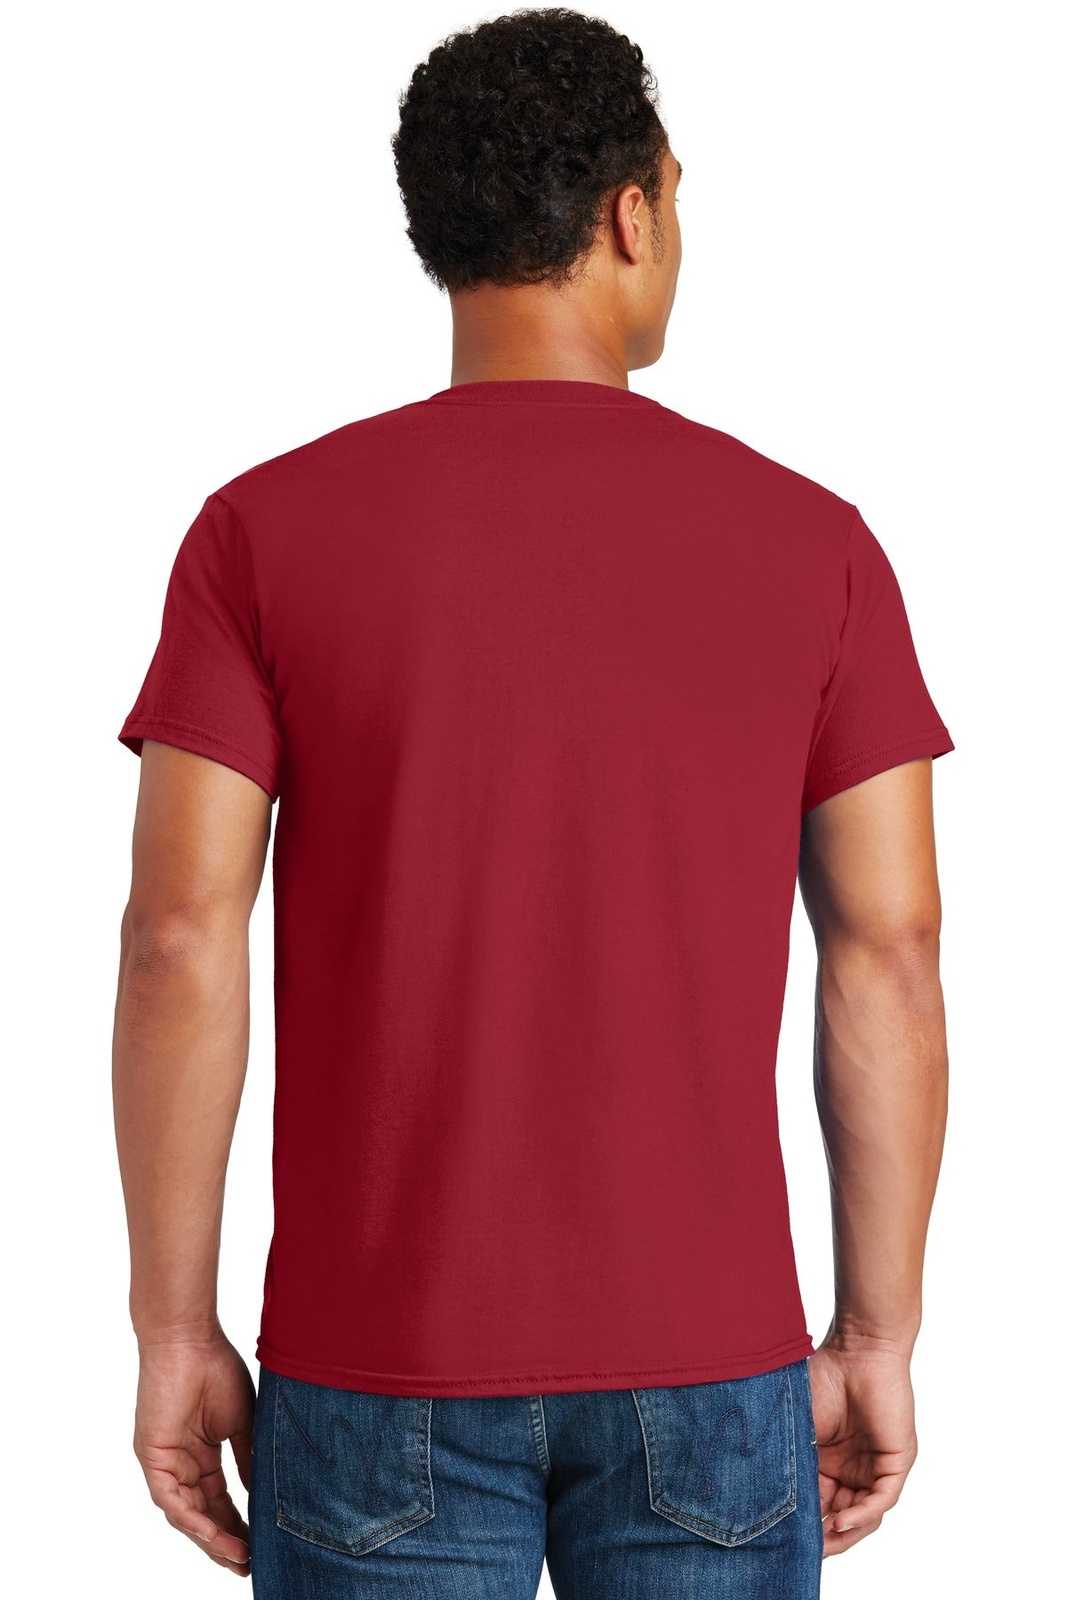 Hanes 4980 Nano-T Cotton T-Shirt - Deep Red - HIT a Double